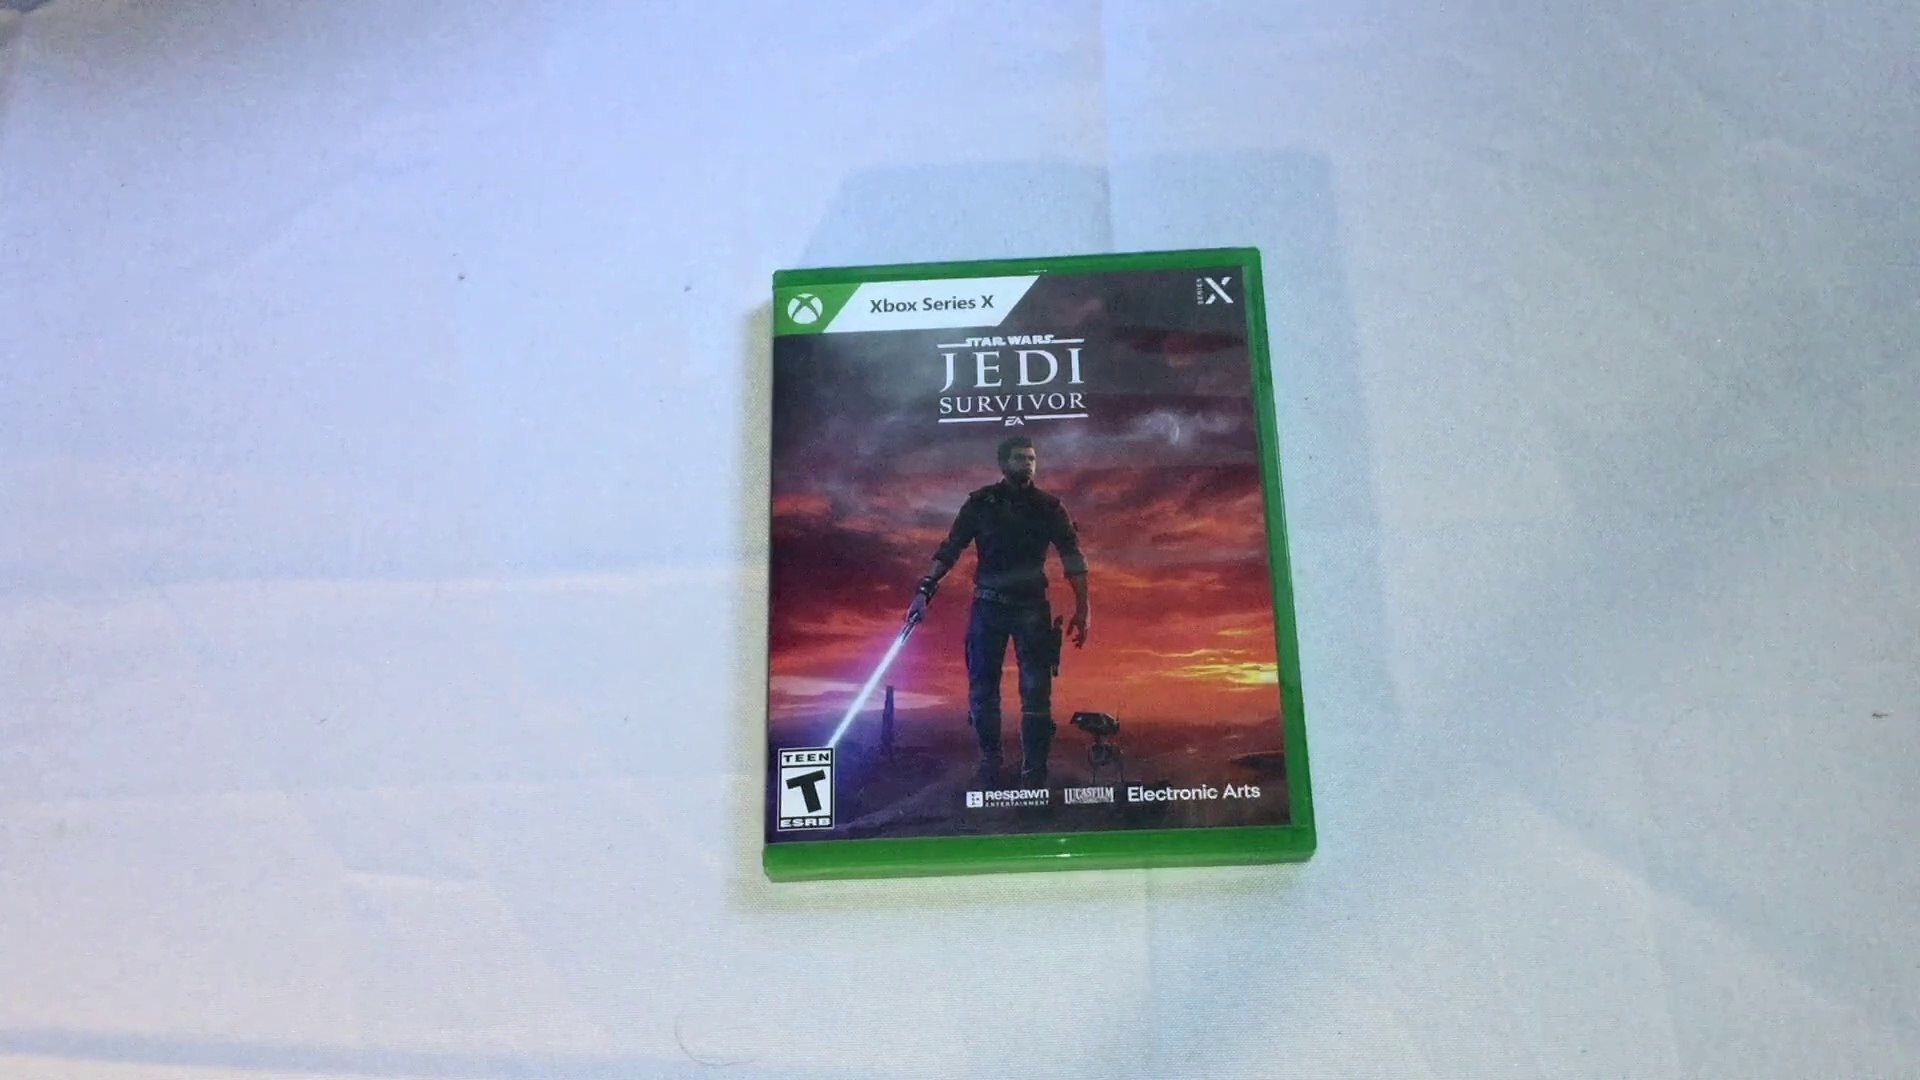 Star Wars Jedi: Survivor (Xbox: Series X) Unboxing. - video Dailymotion